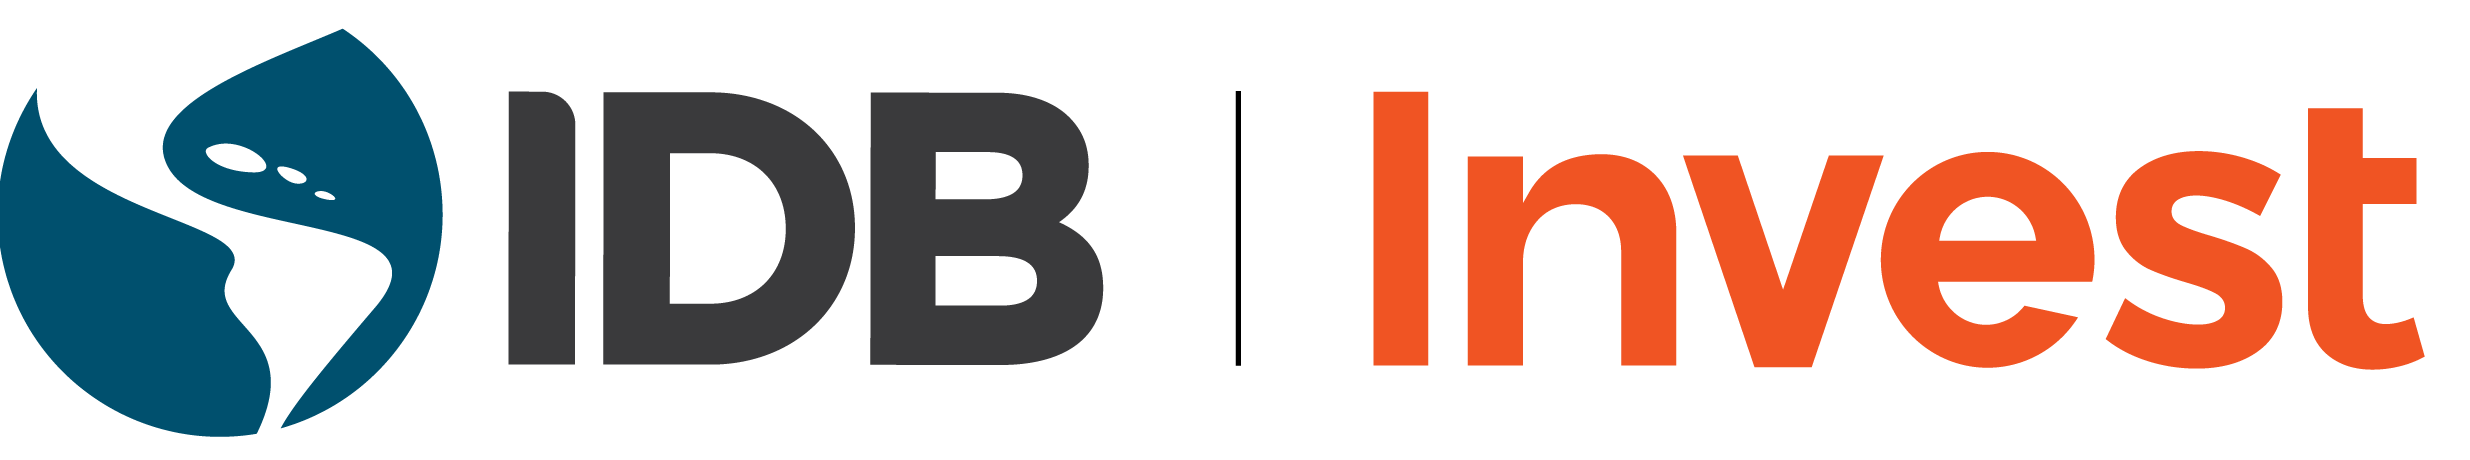 IDB Invest logo